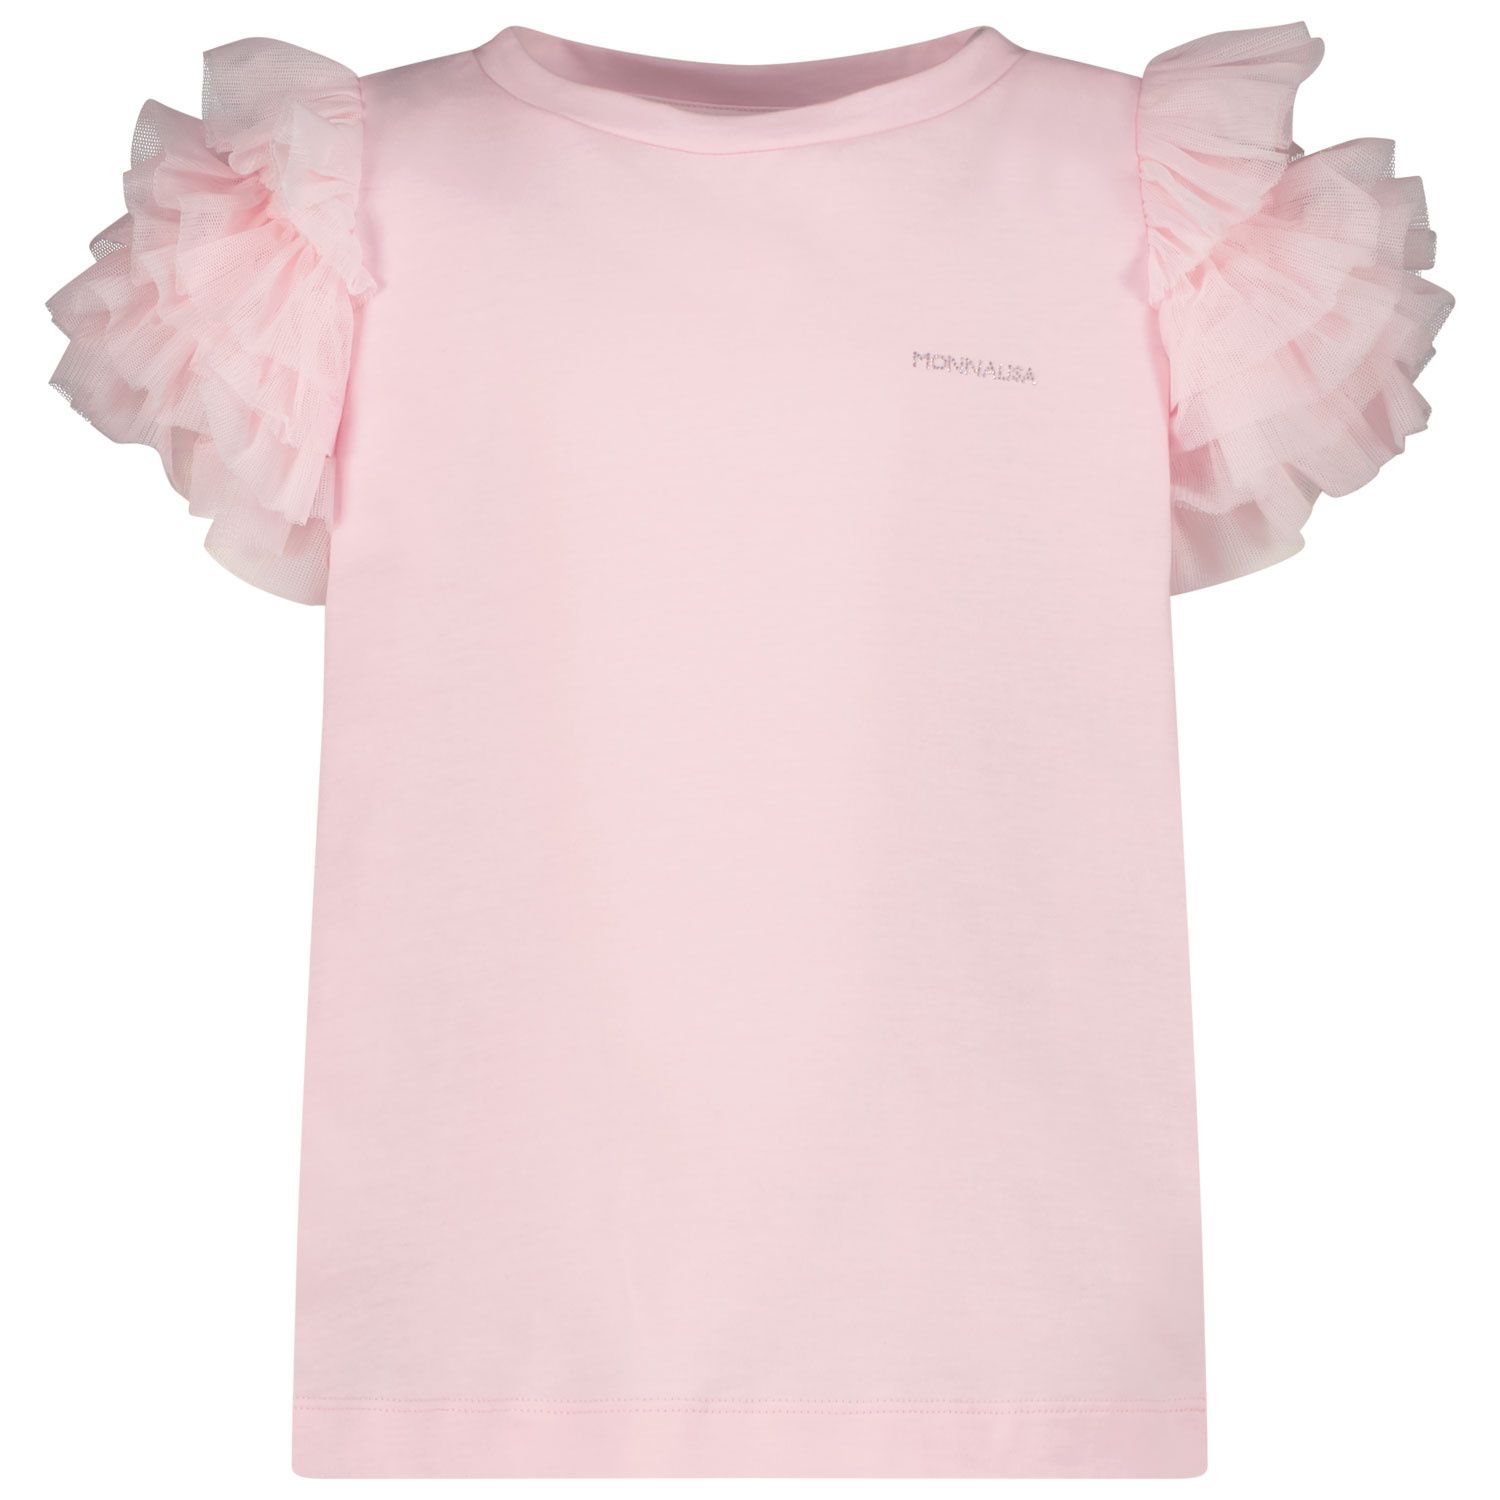 Picture of MonnaLisa 179603 kids t-shirt light pink